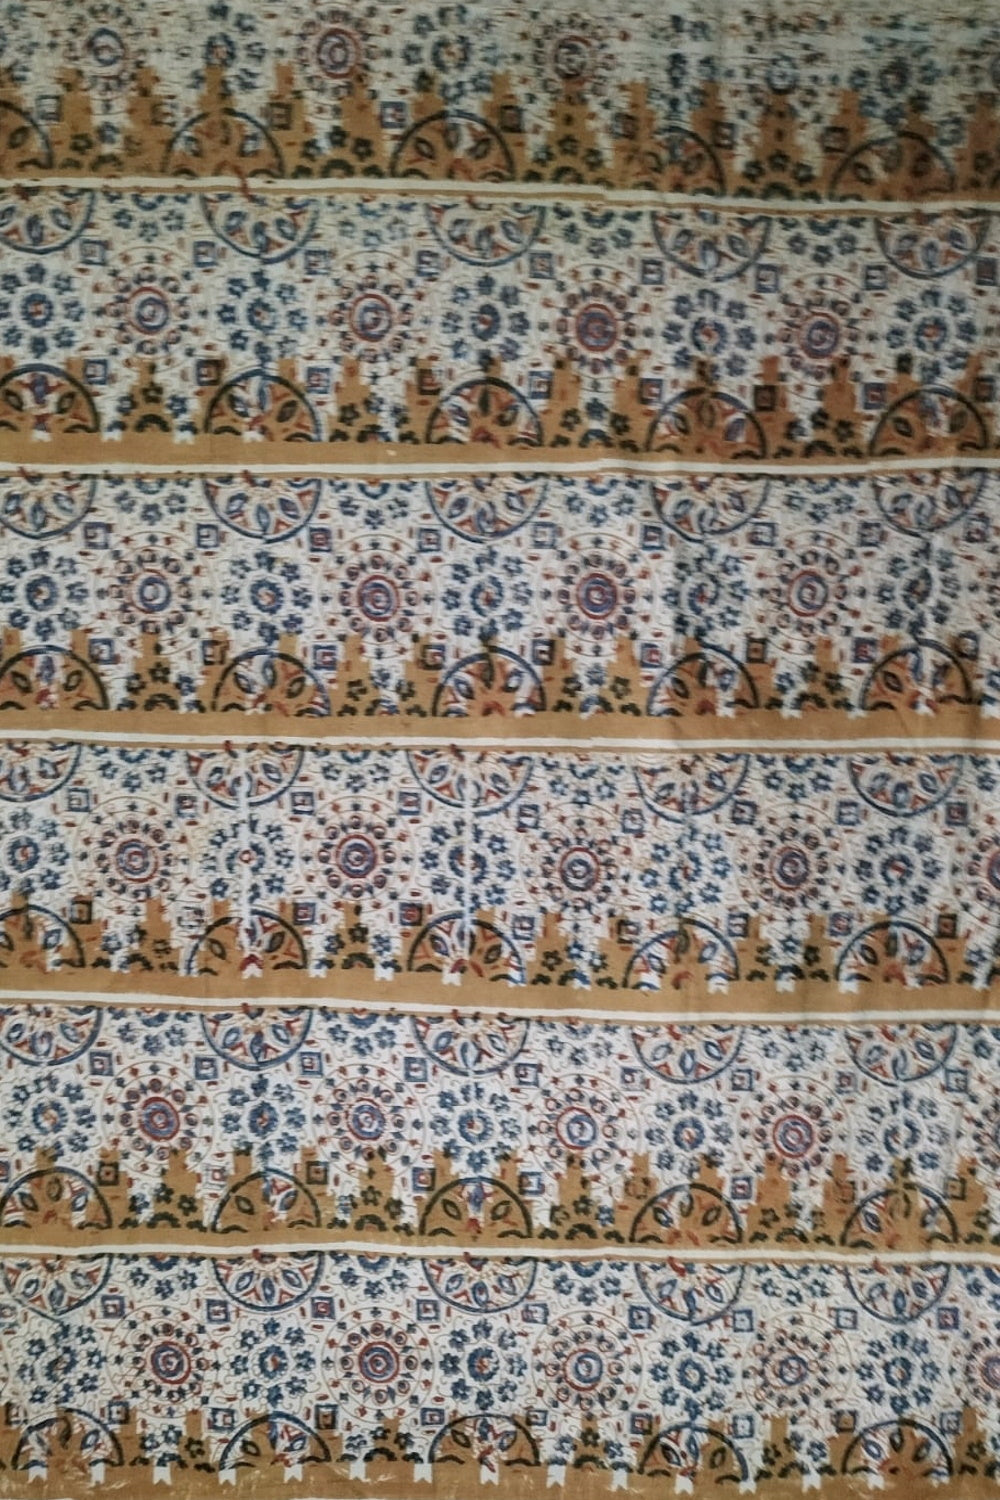 Patterned on Cream Ajrak Cotton Fabric - 0.5m